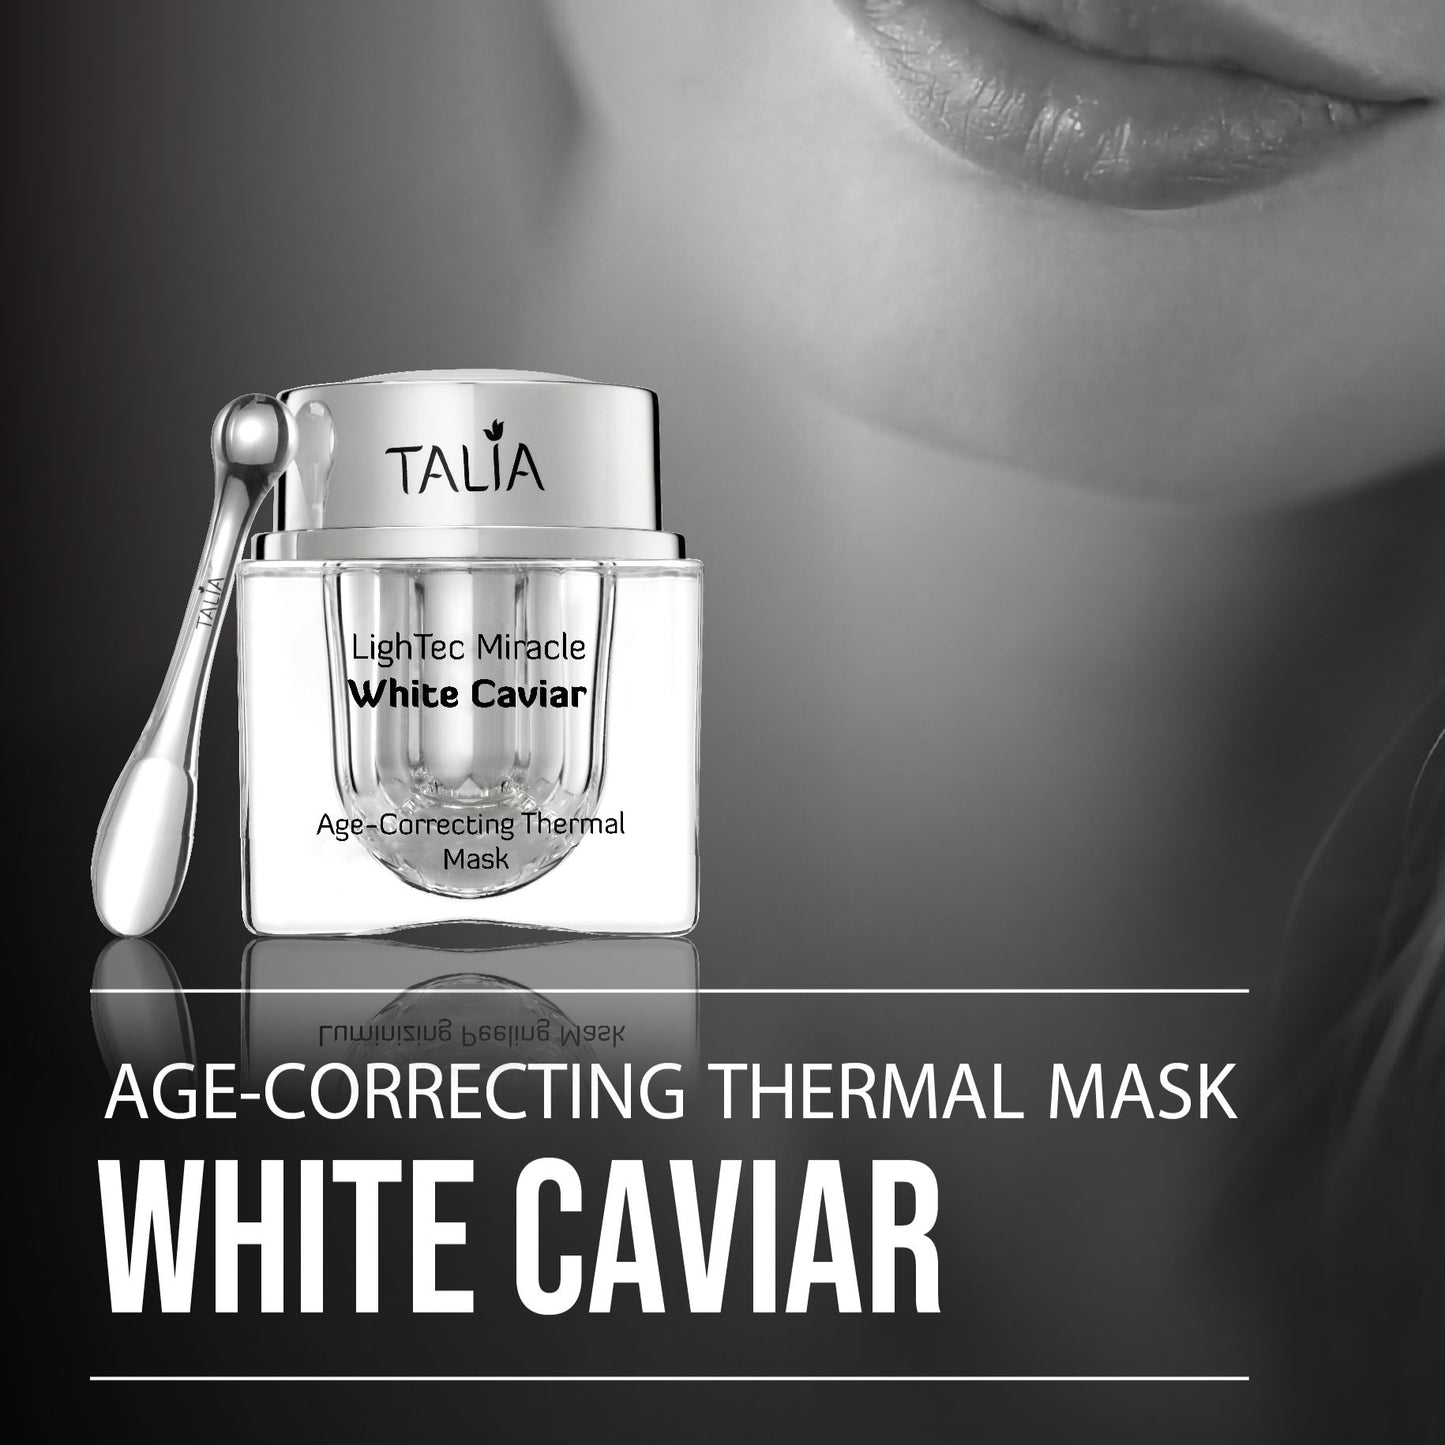 Age-Correcting Thermal Mask